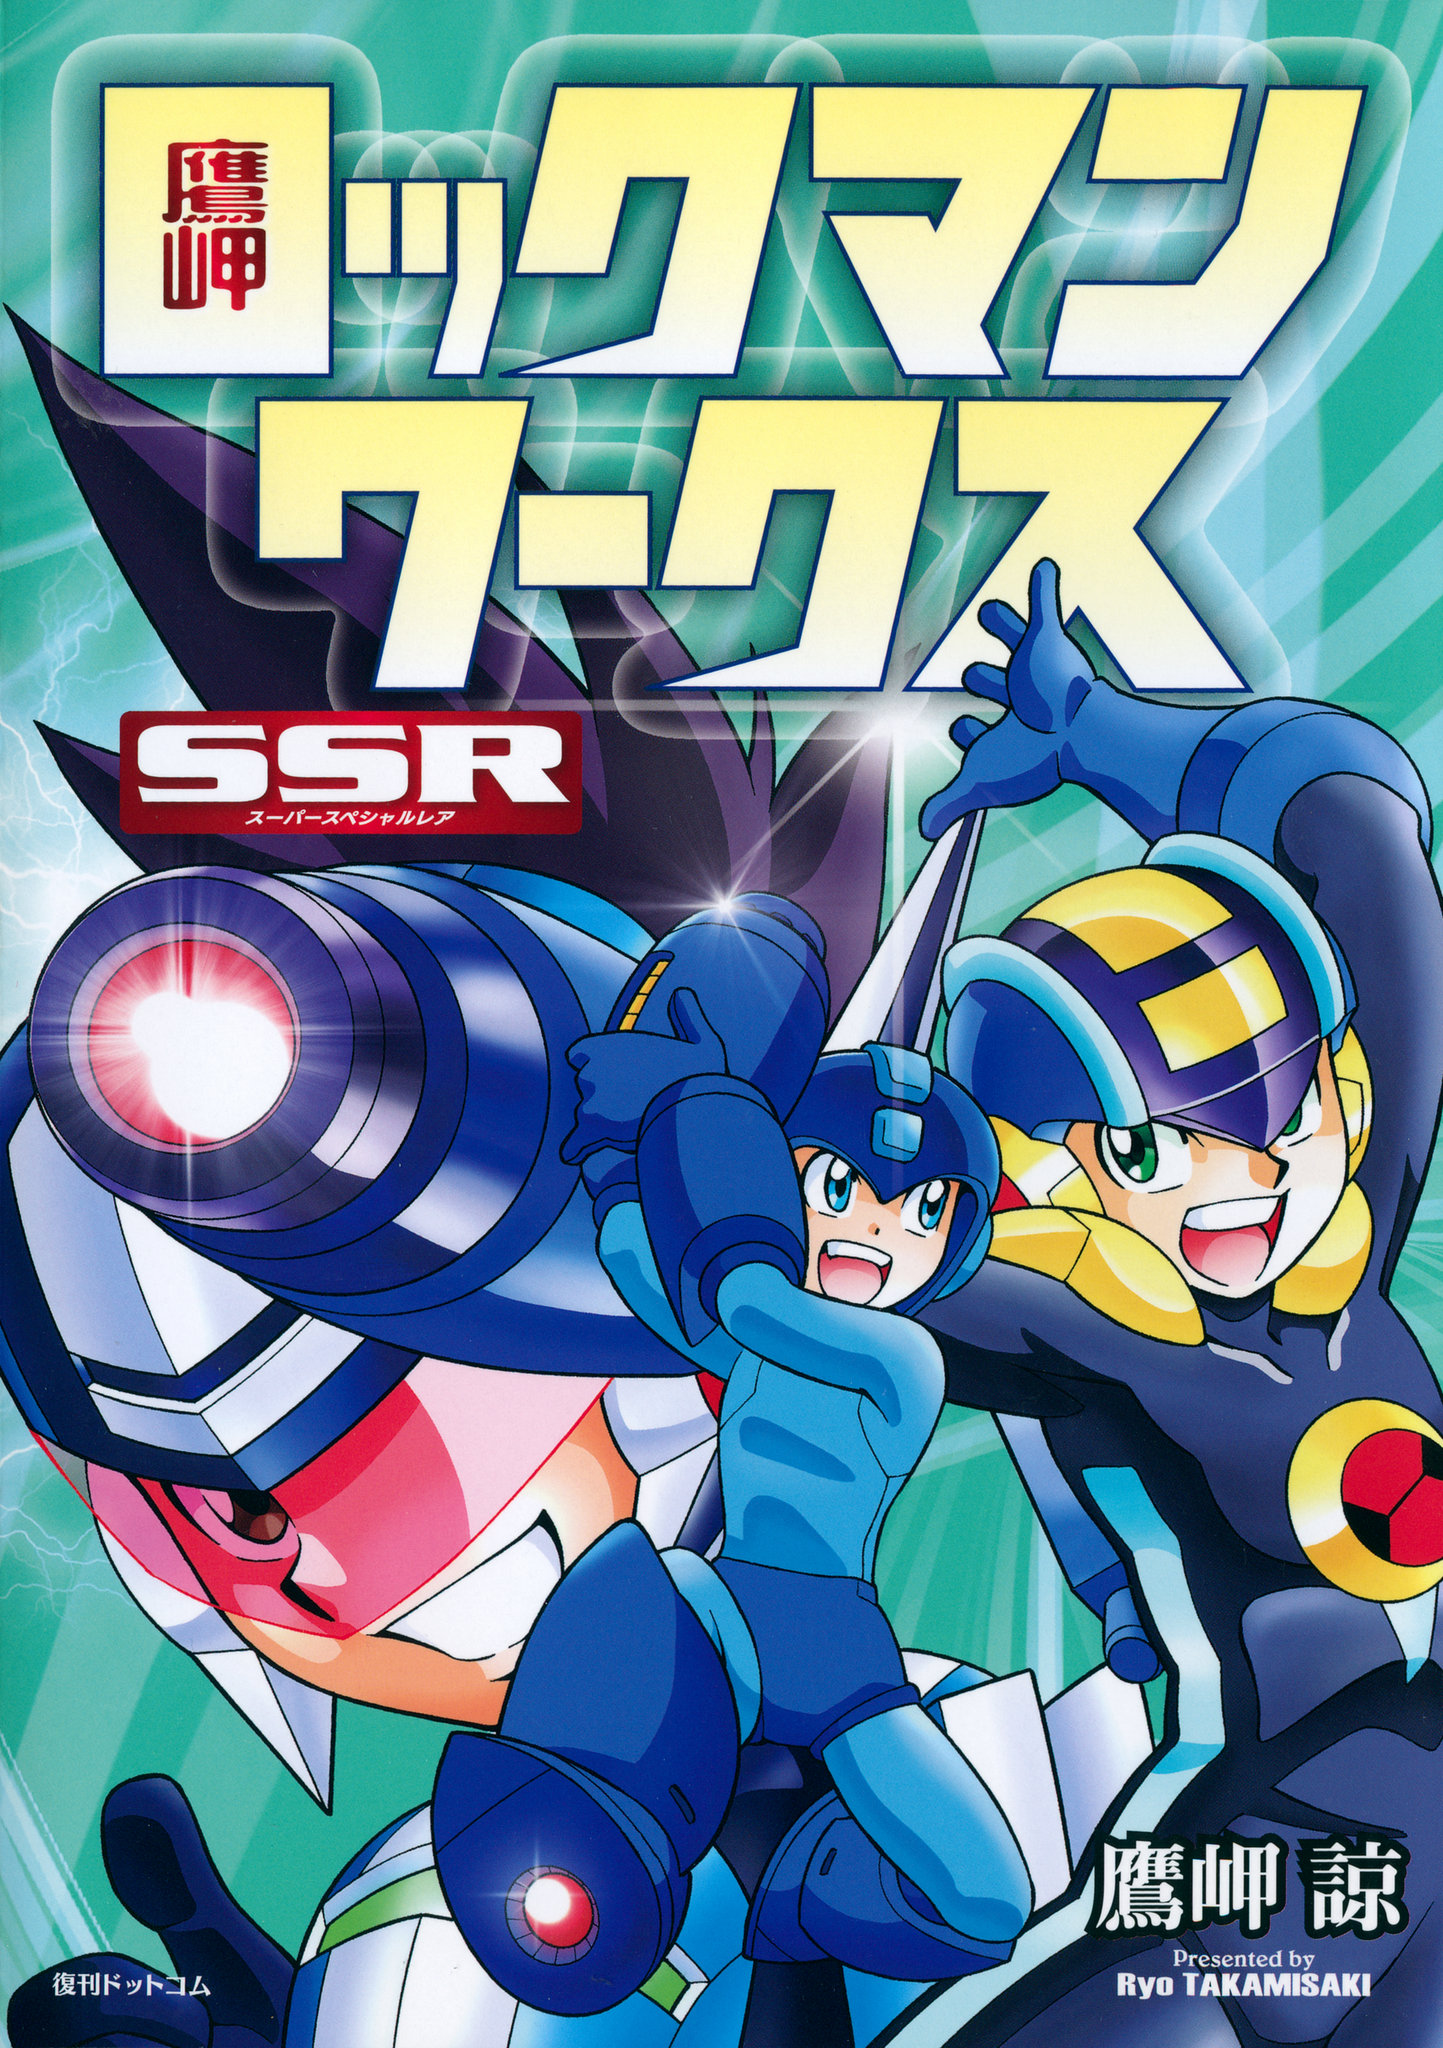 Takamisaki Mega Man Works SSR (Super Special Rare)